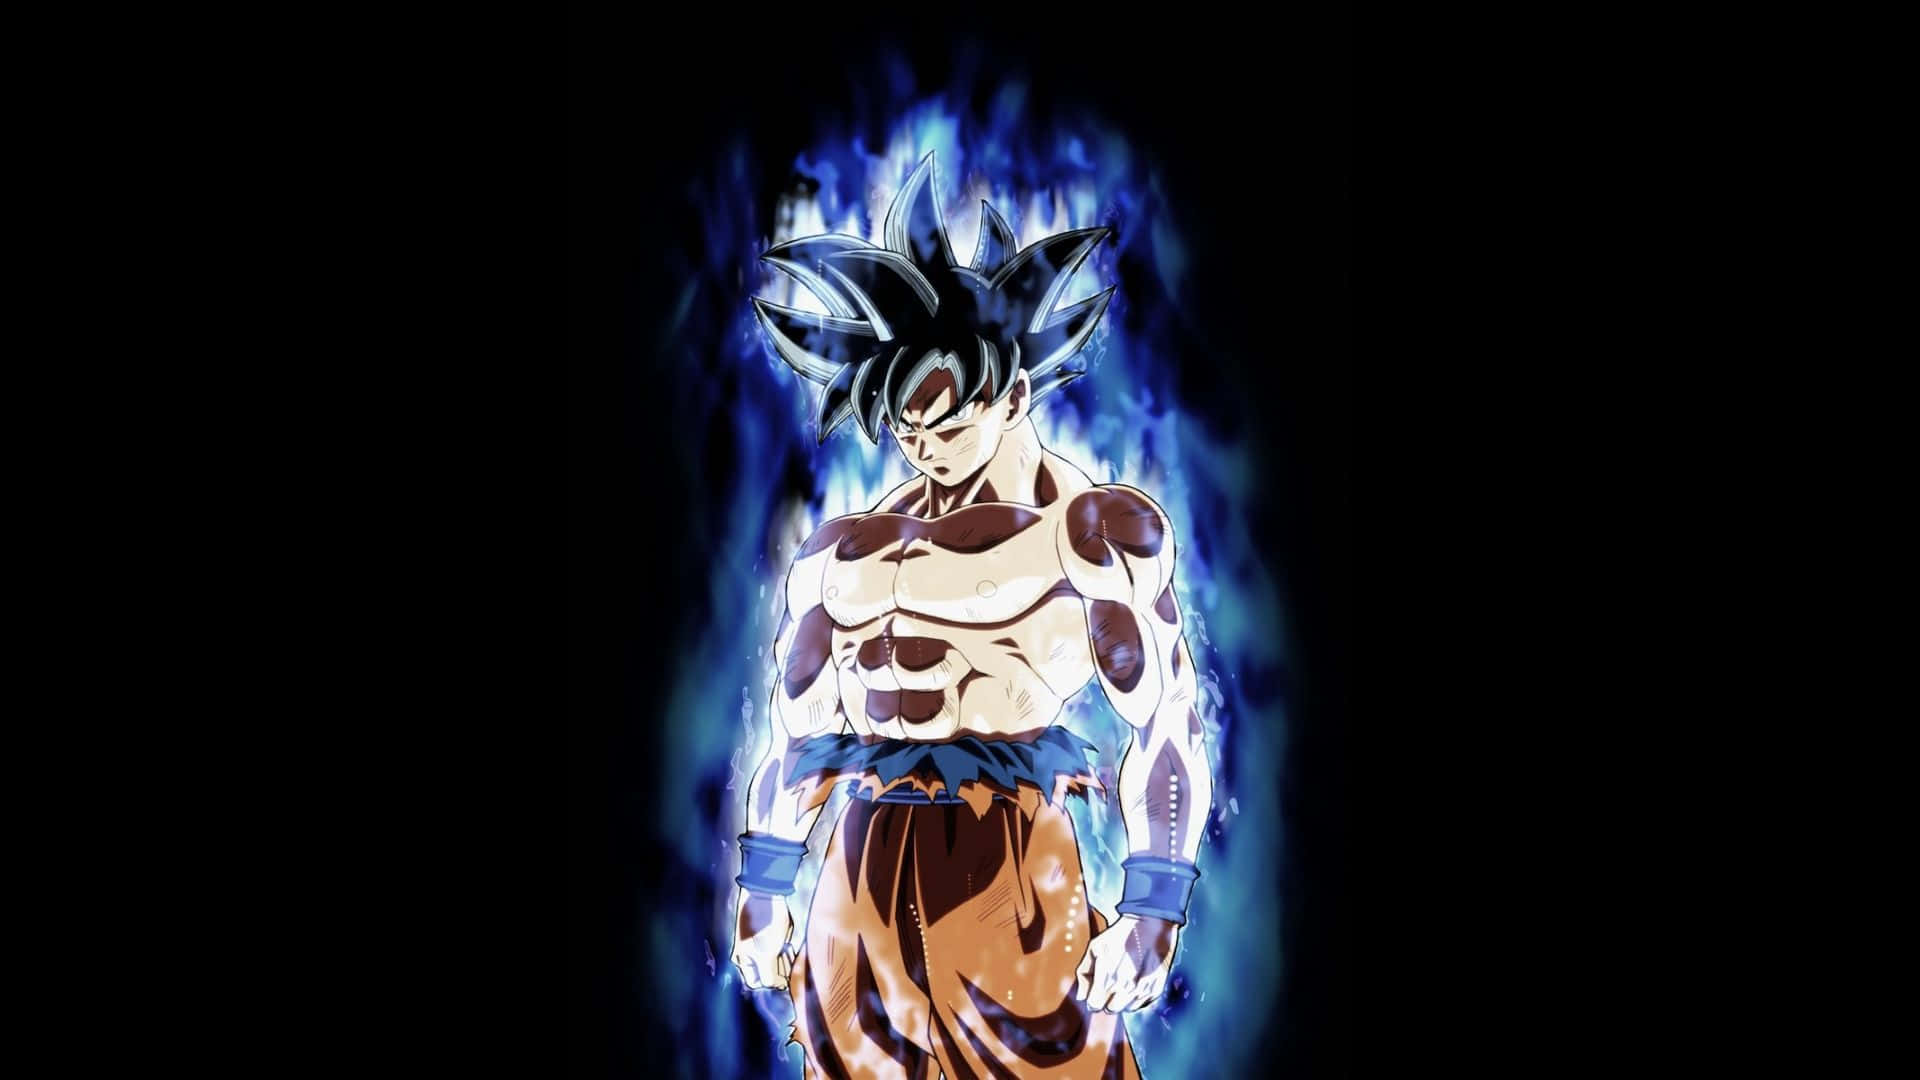 Goku harnesses the power of Ultra Instinct